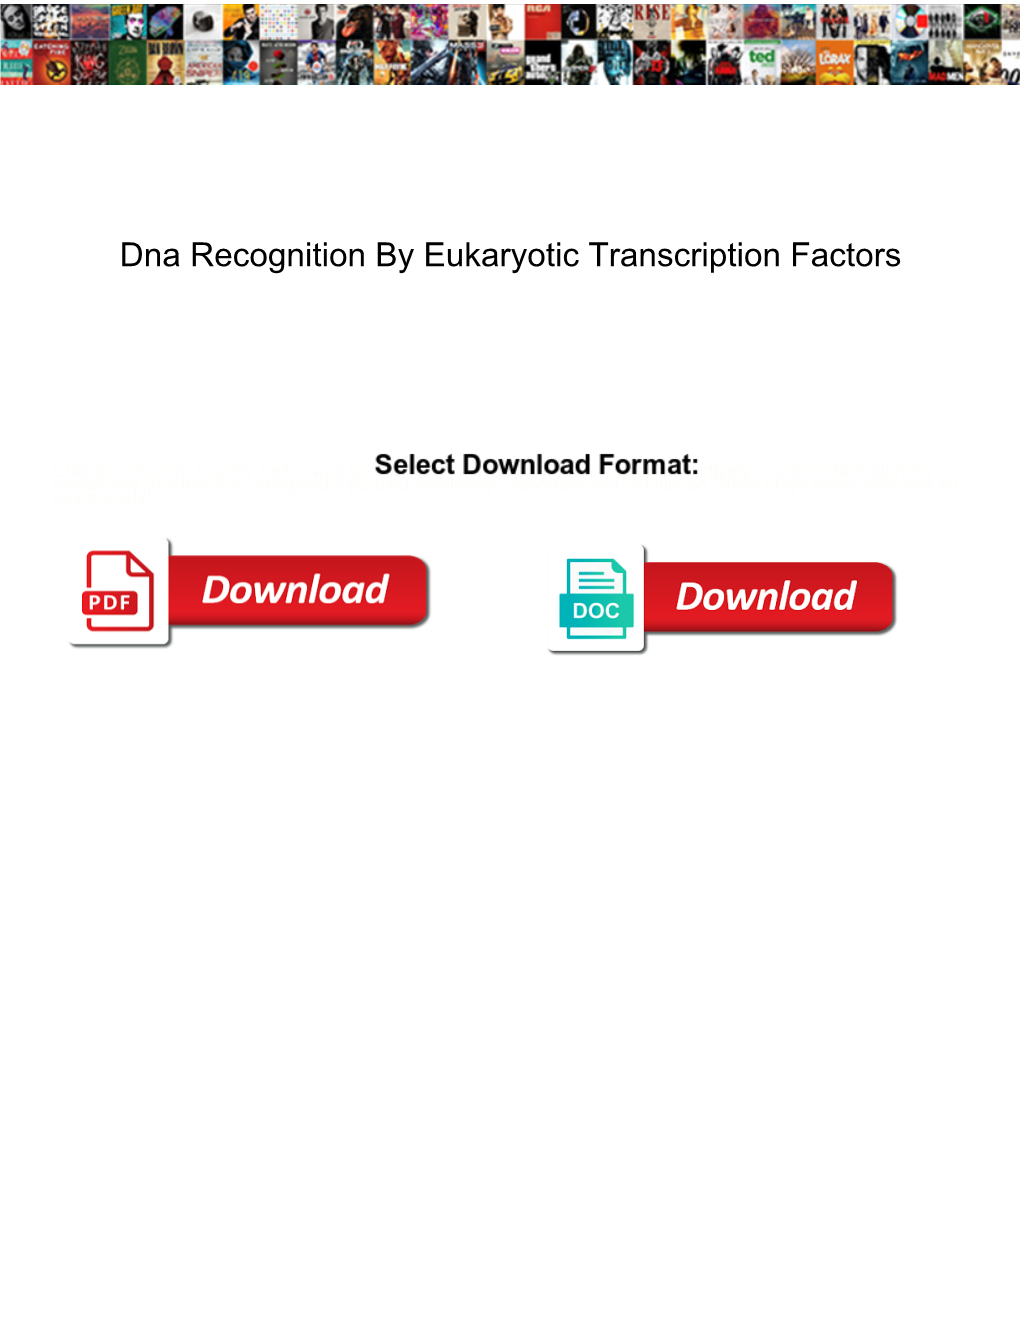 Dna Recognition by Eukaryotic Transcription Factors